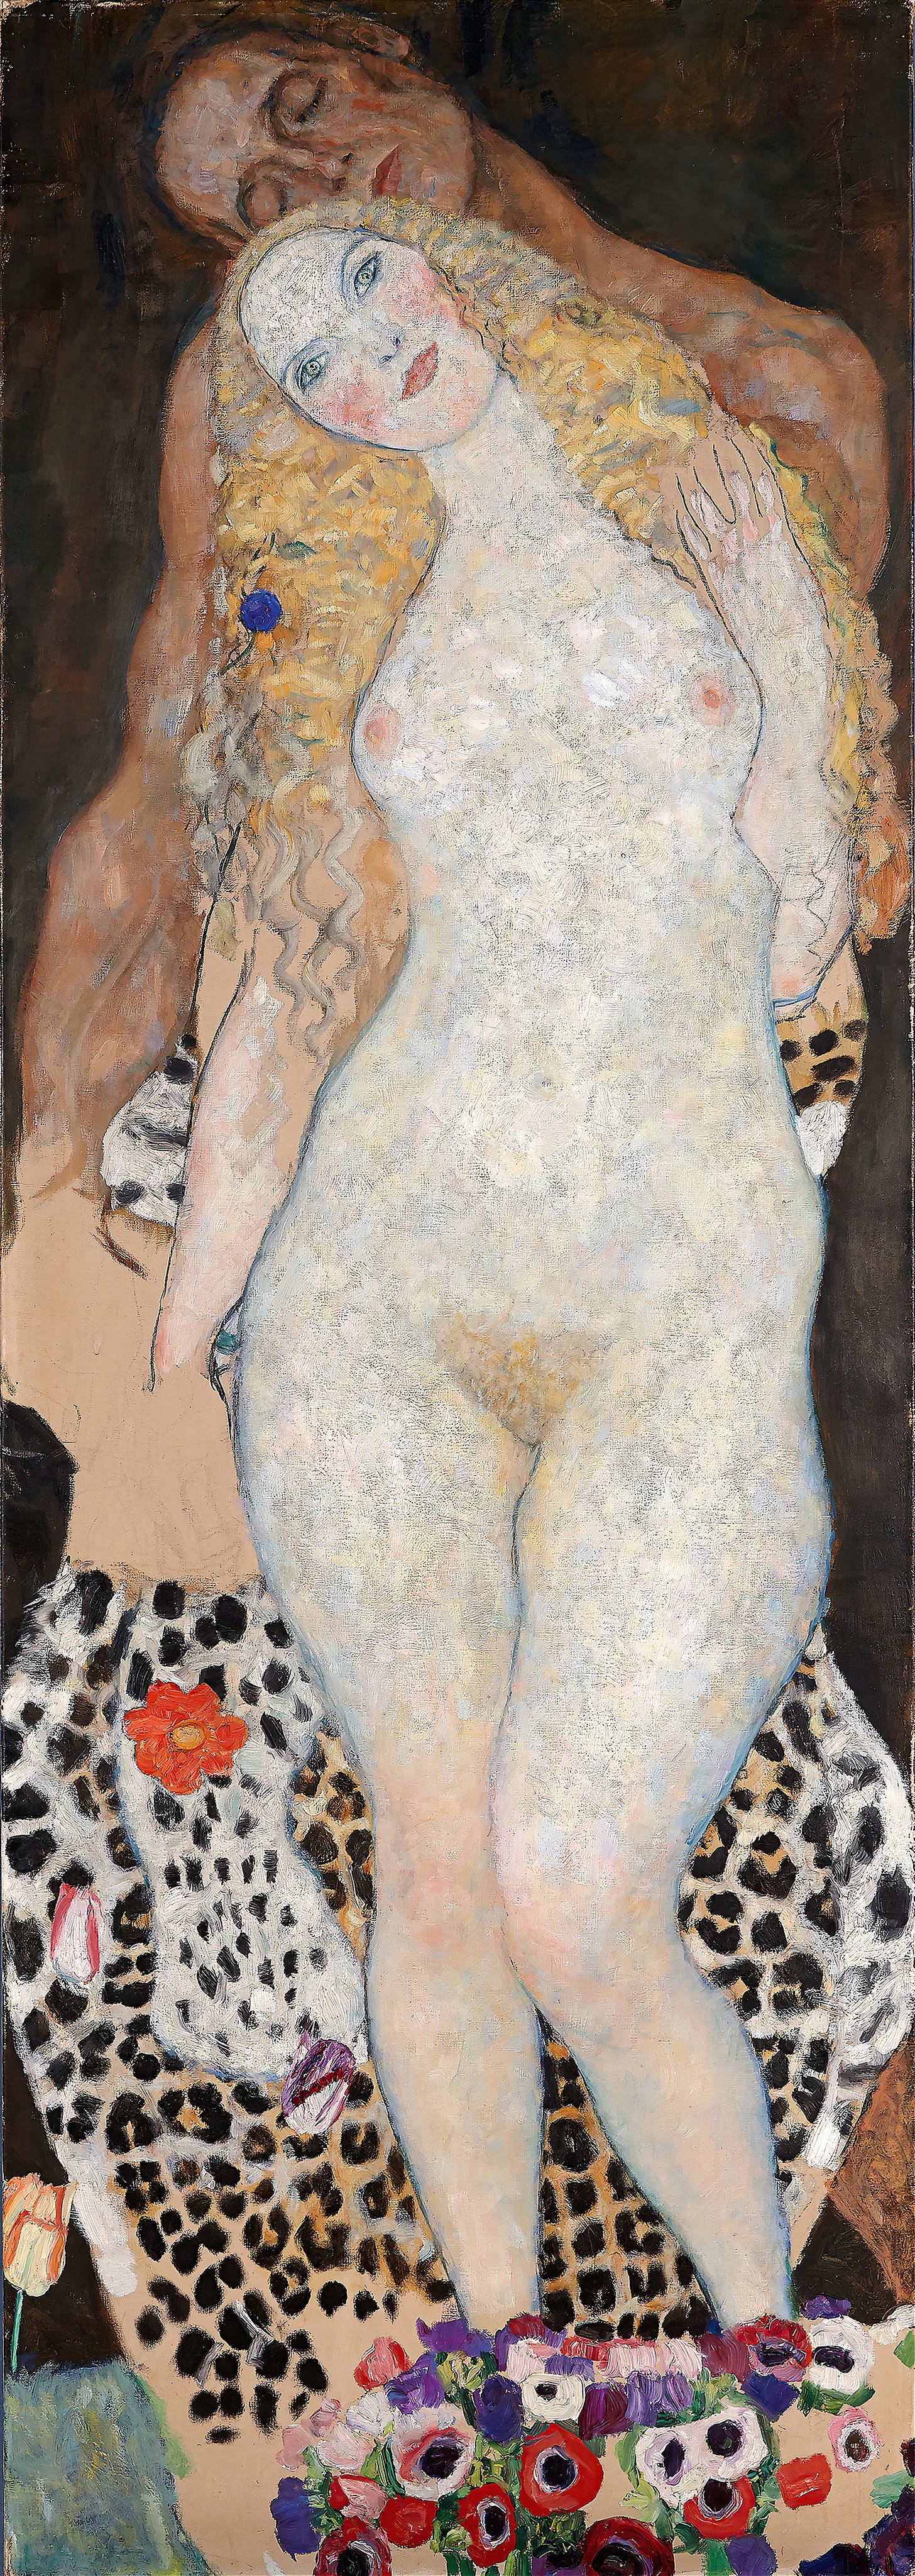 Adam And Eve (1916) by Gustav Klimt